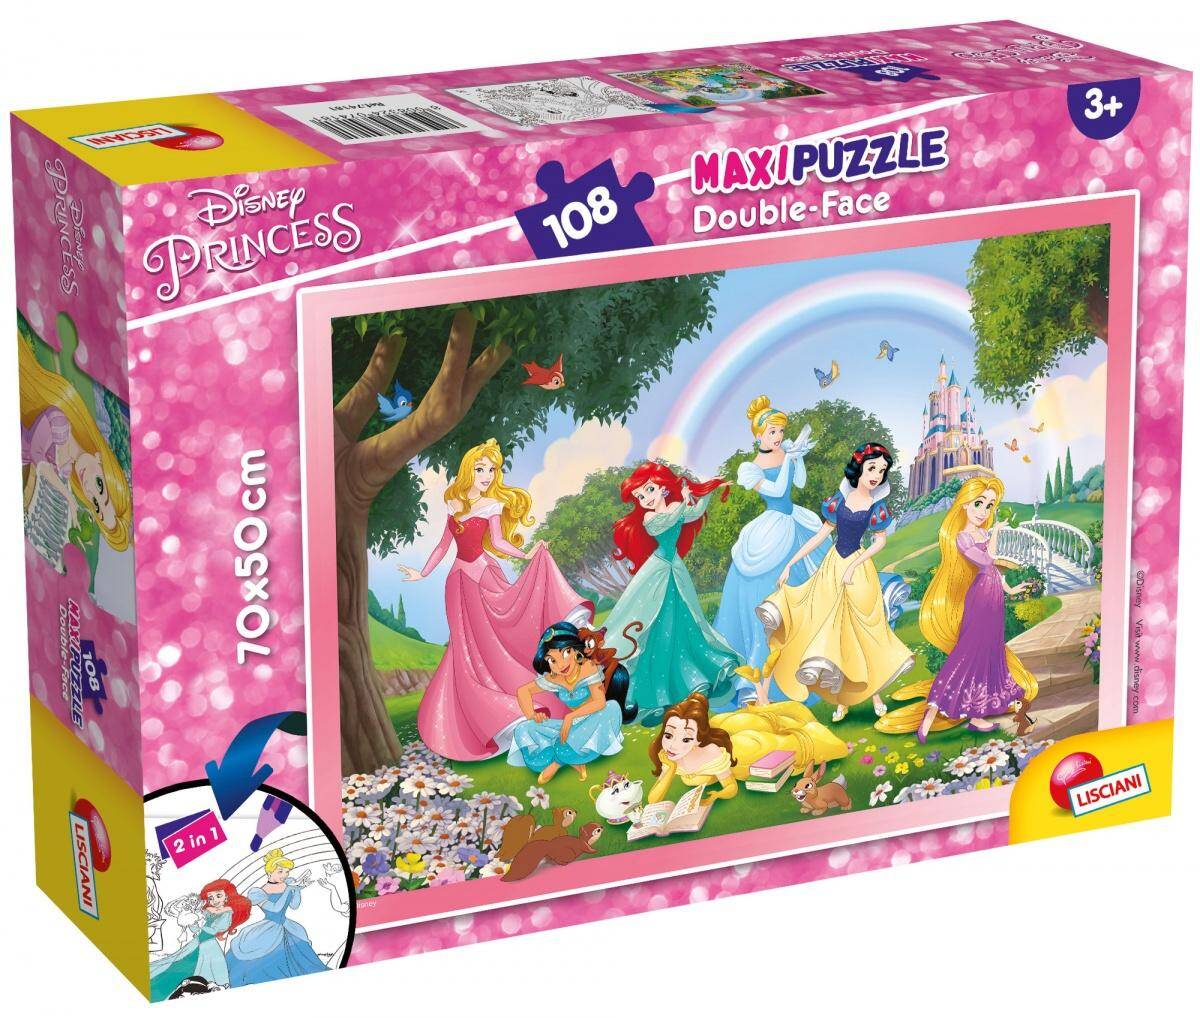 Puzzle 108 maxi double-face Princess 2 304-74181